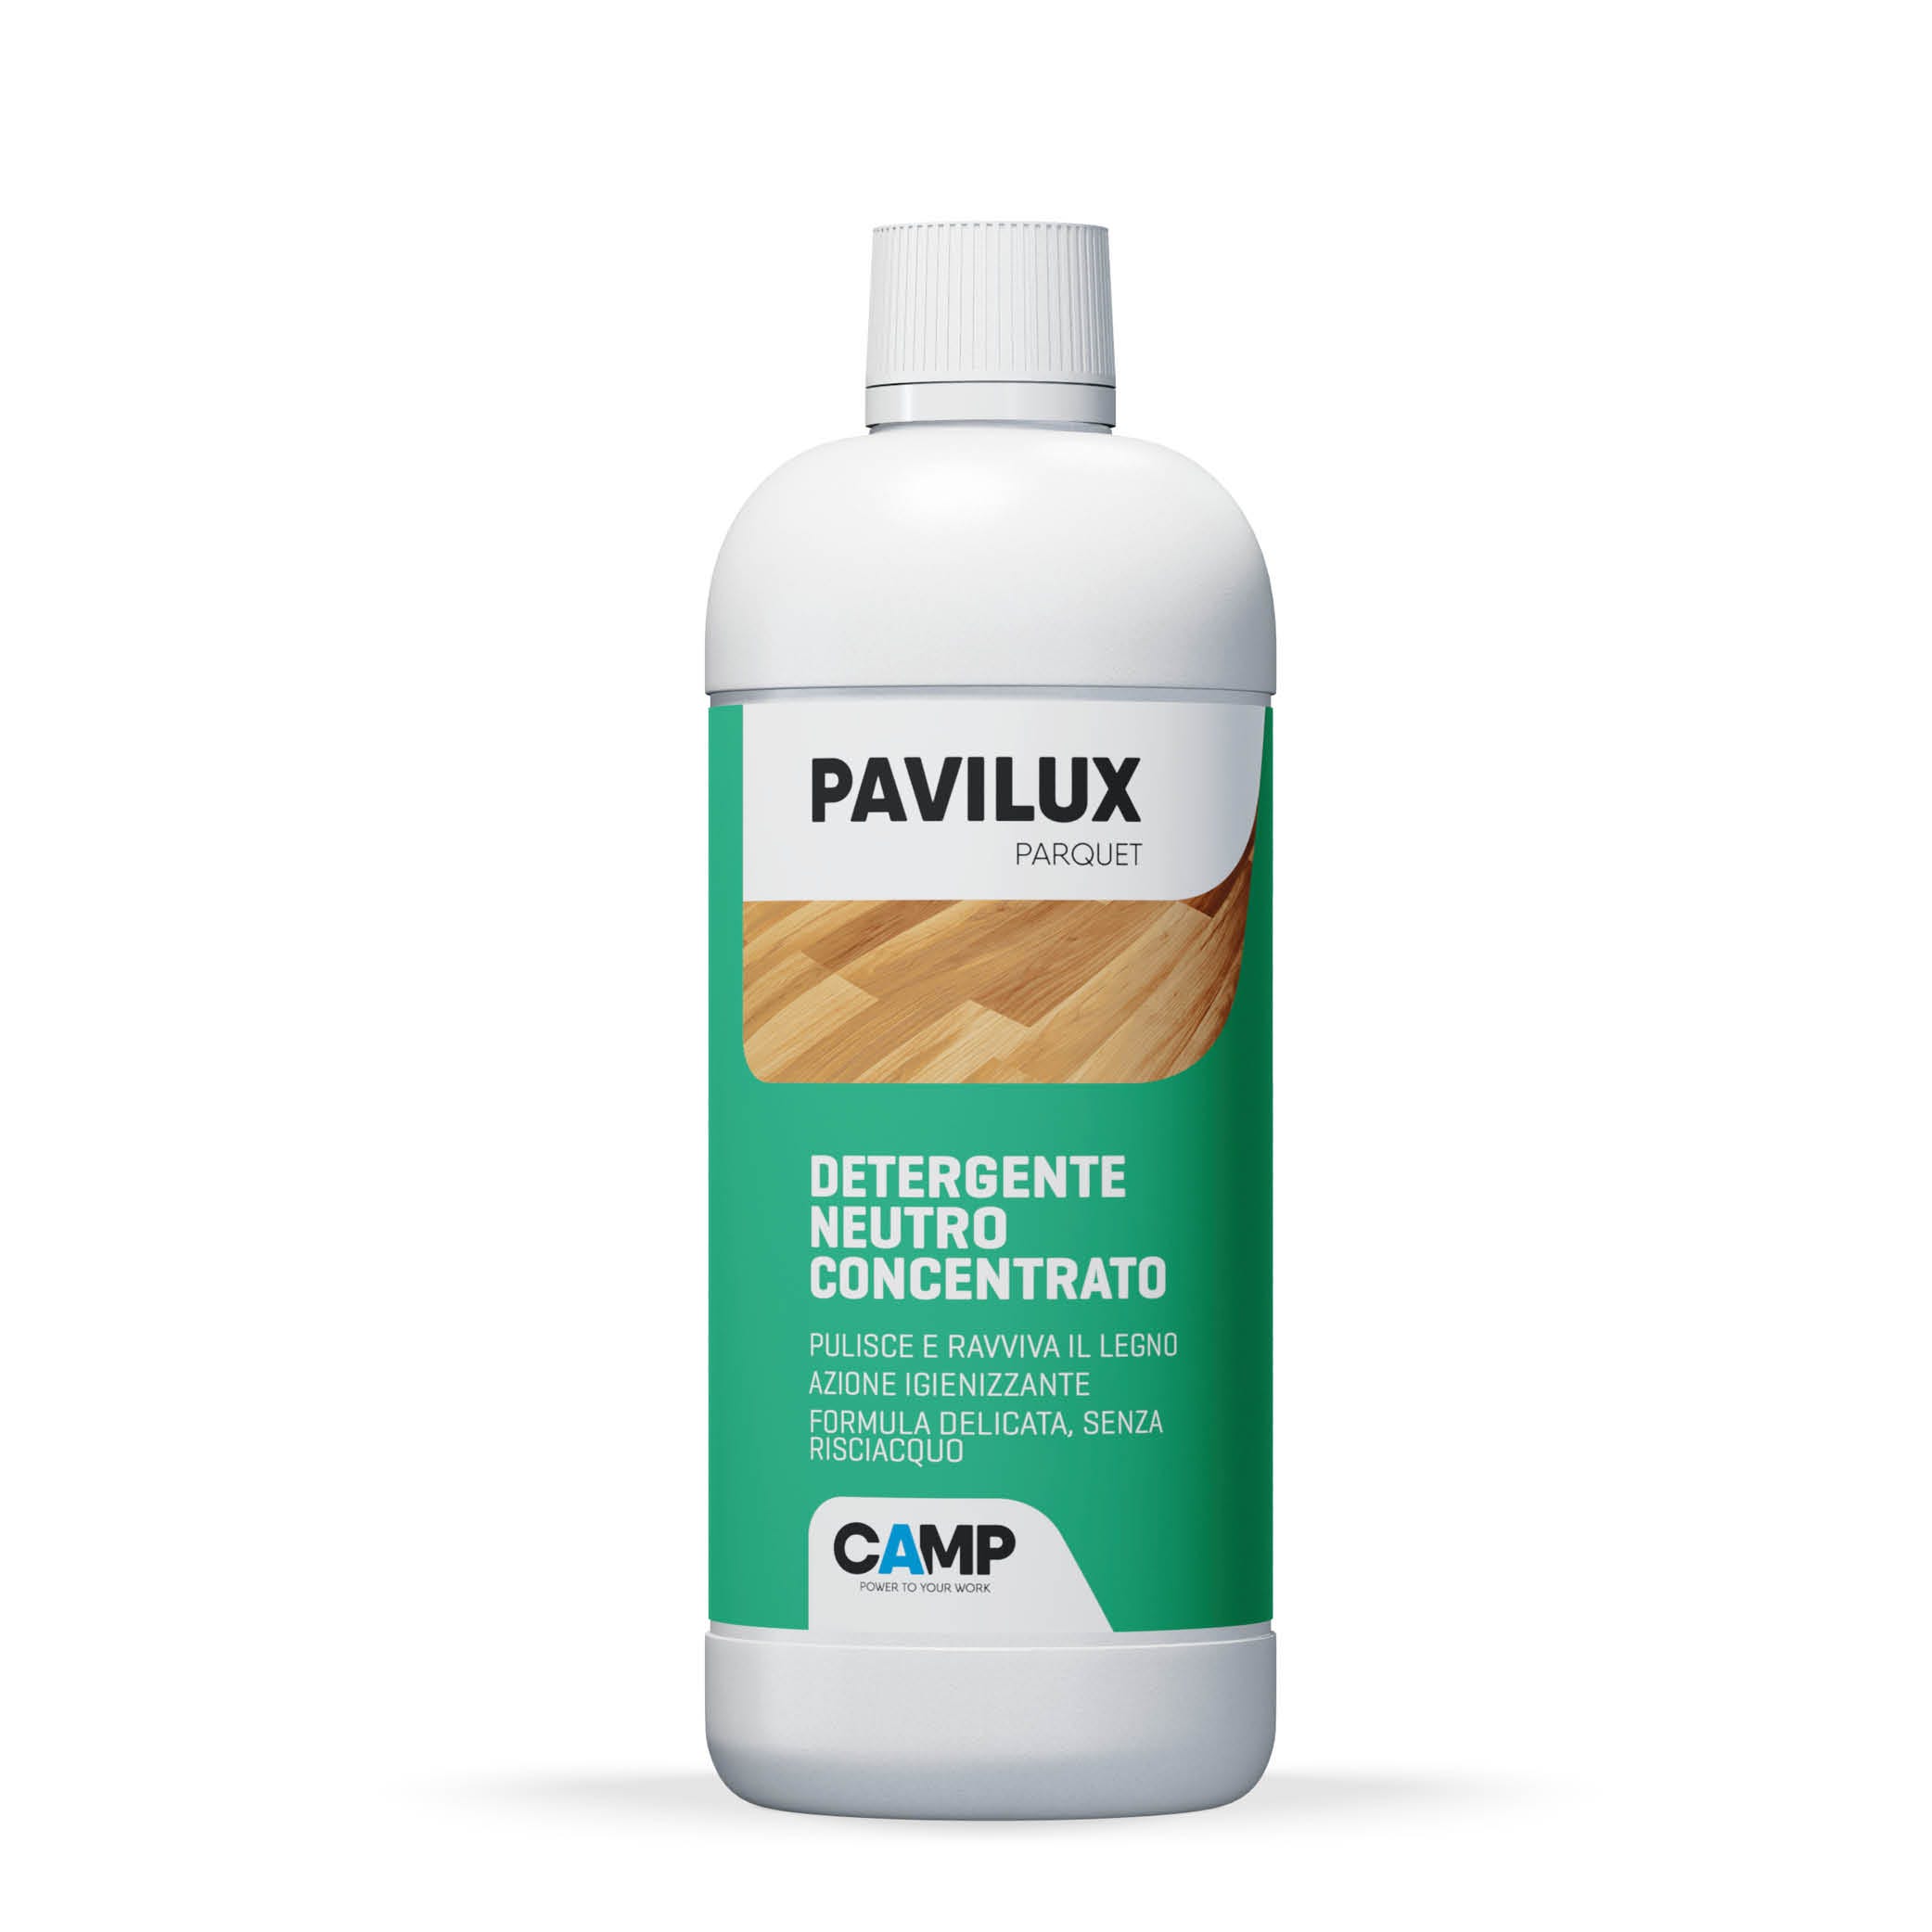 Camp PAVILUX PARQUET, Detergente igienizzante neutro per parquet